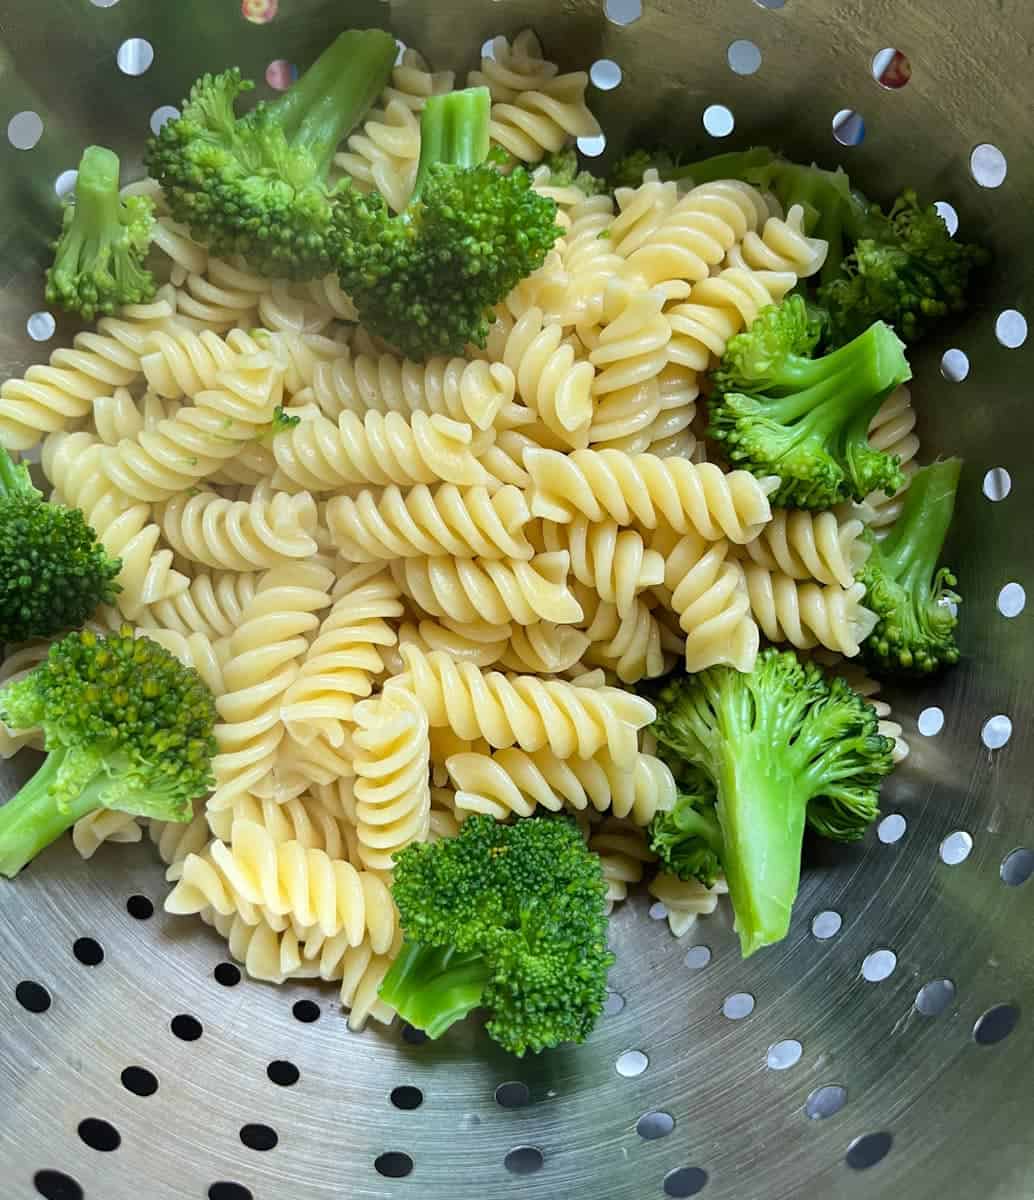 a silver colander of cooked Fusilli pasta and broccoli florets.